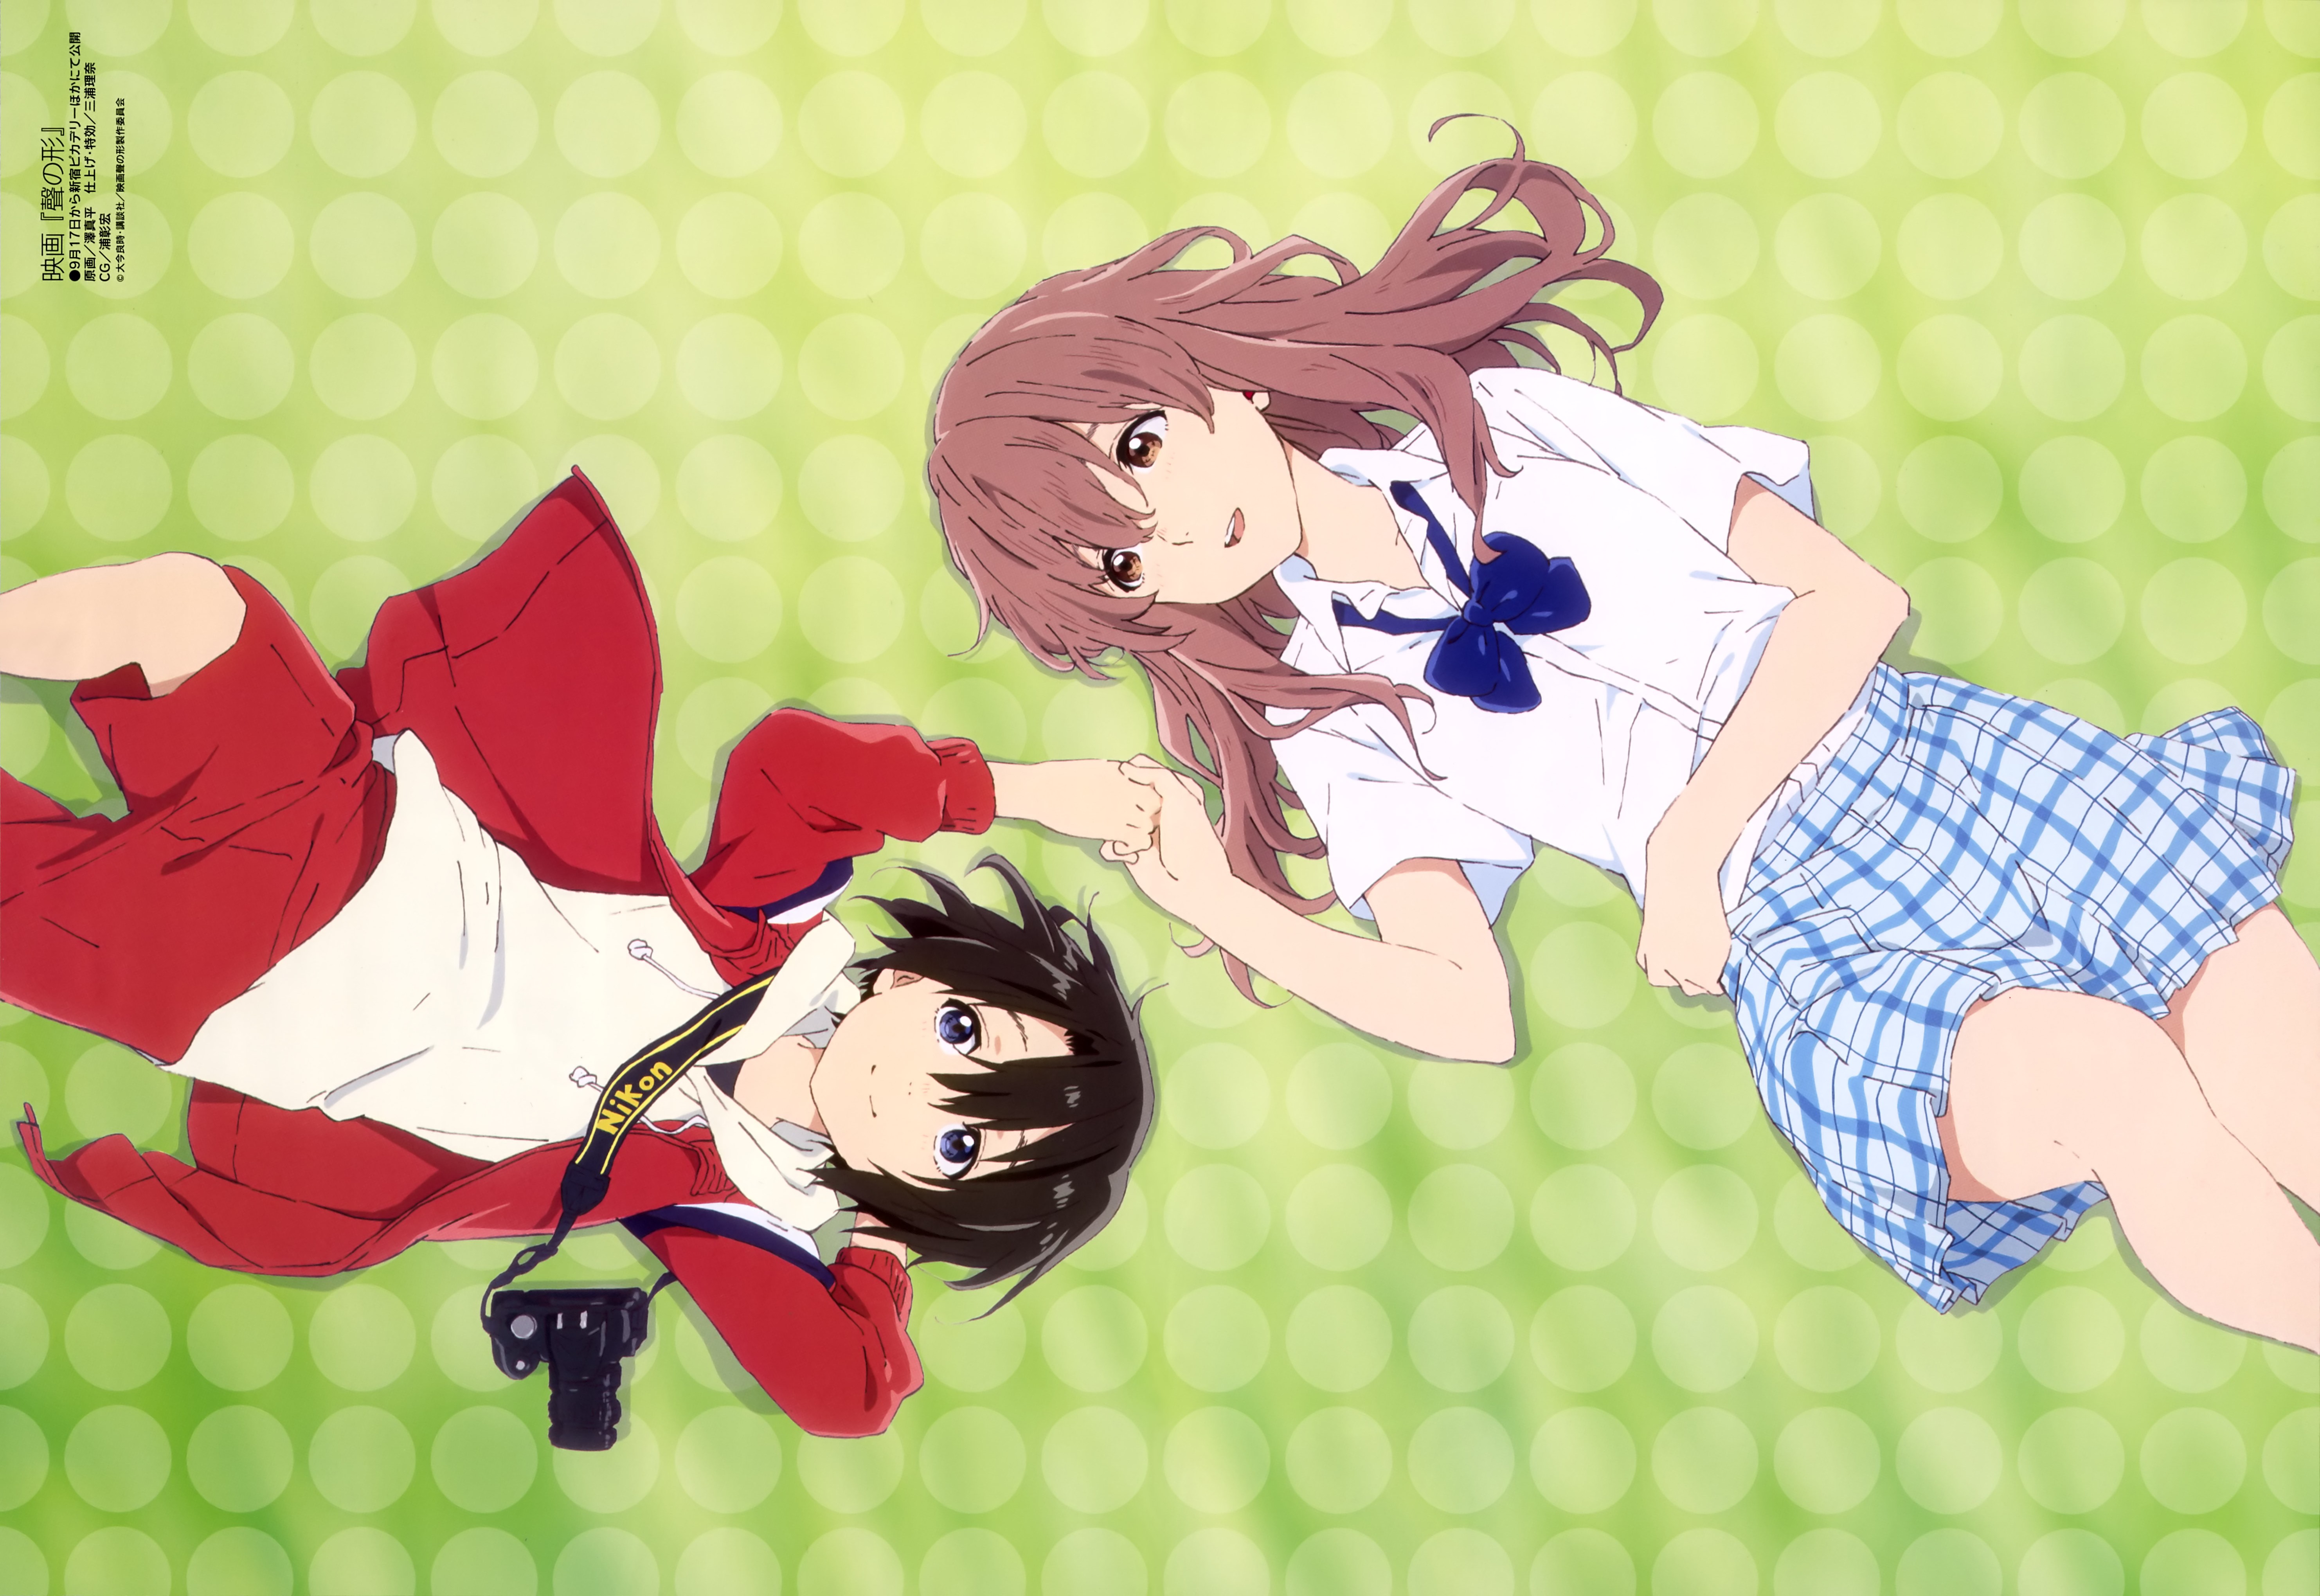 Download Wallpaper Koe No Katachi - Top Anime Wallpaper